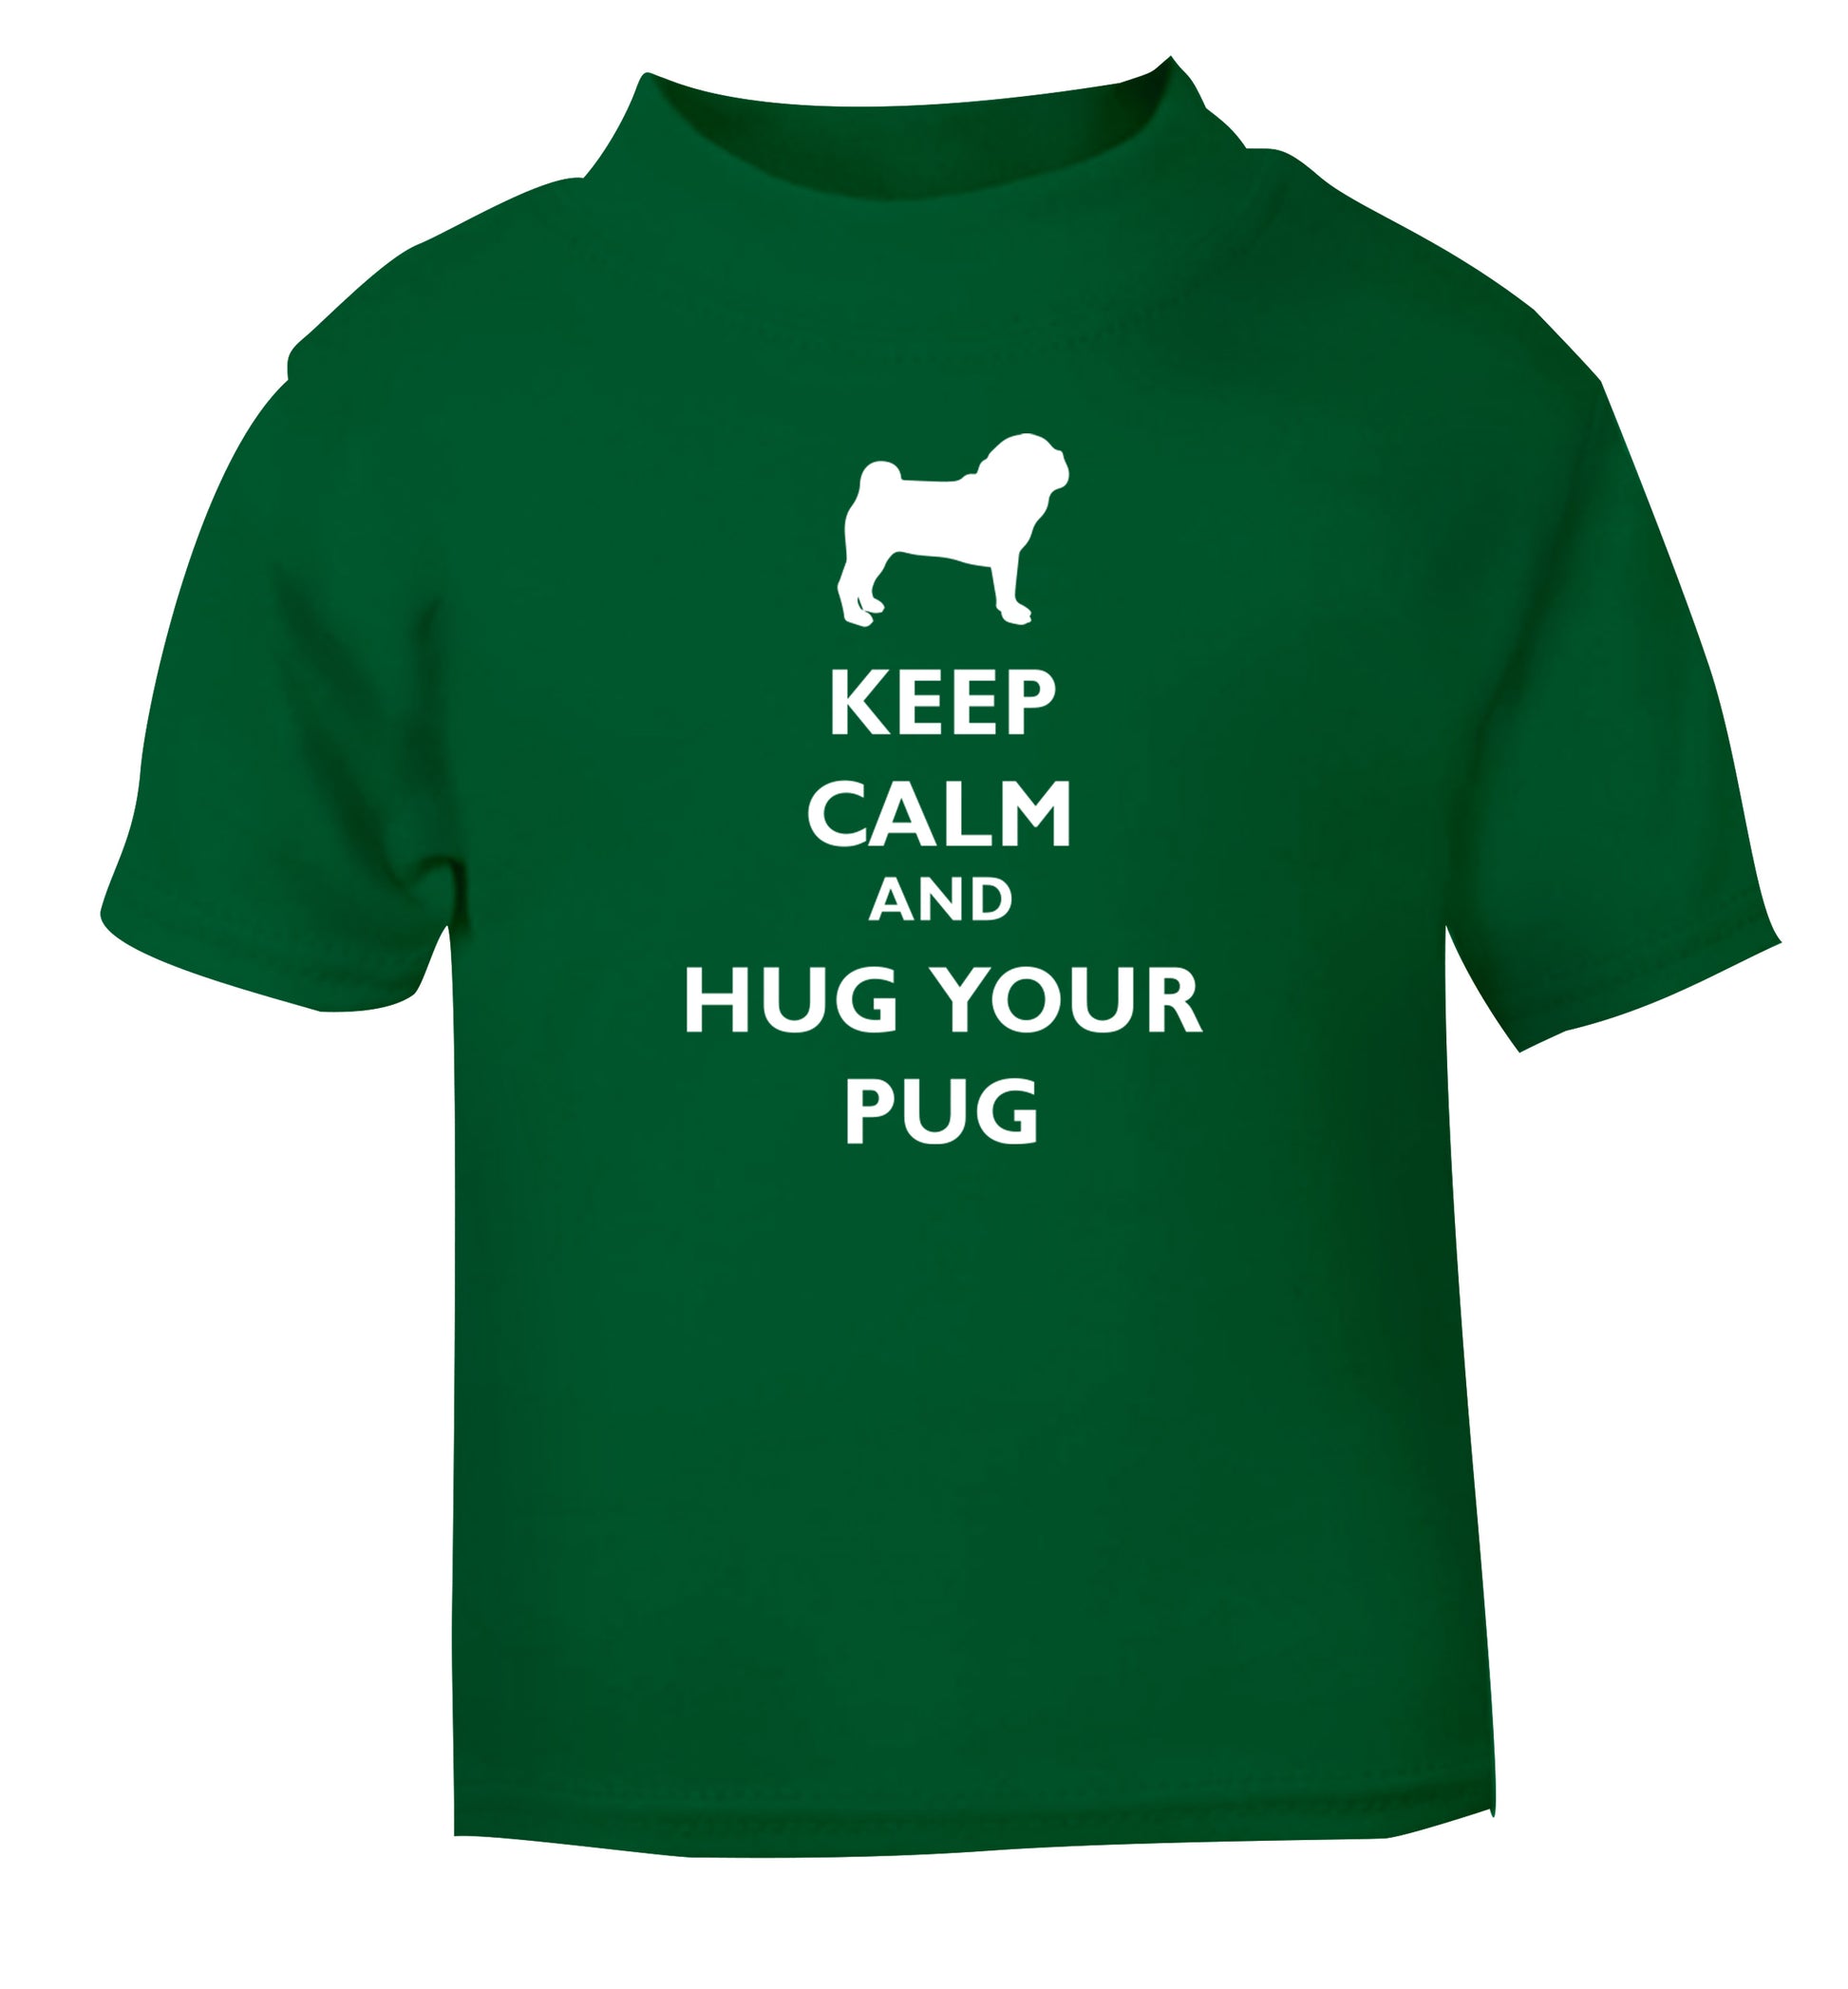 Keep calm and hug your pug green Baby Toddler Tshirt 2 Years